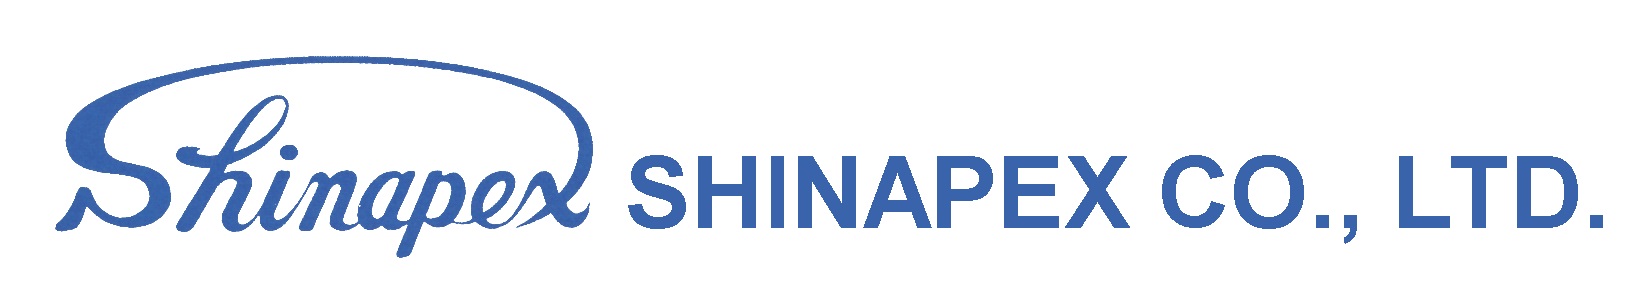 SHINAPEX CO., LTD.